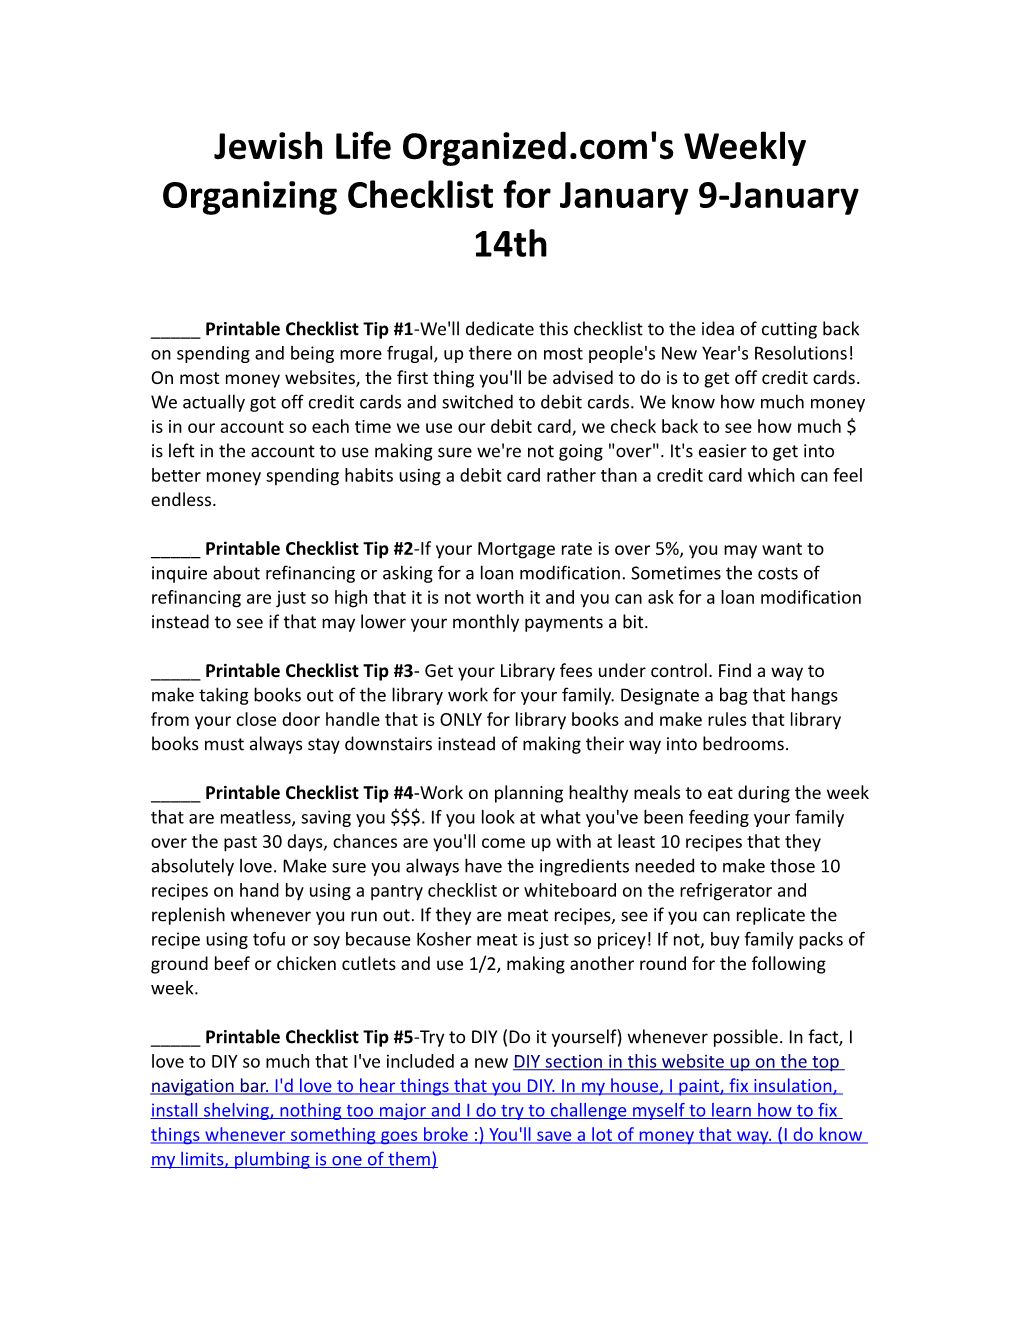 Jewish Life Organized.Com's Weekly Organizing Checklist for January 9-January 14Th